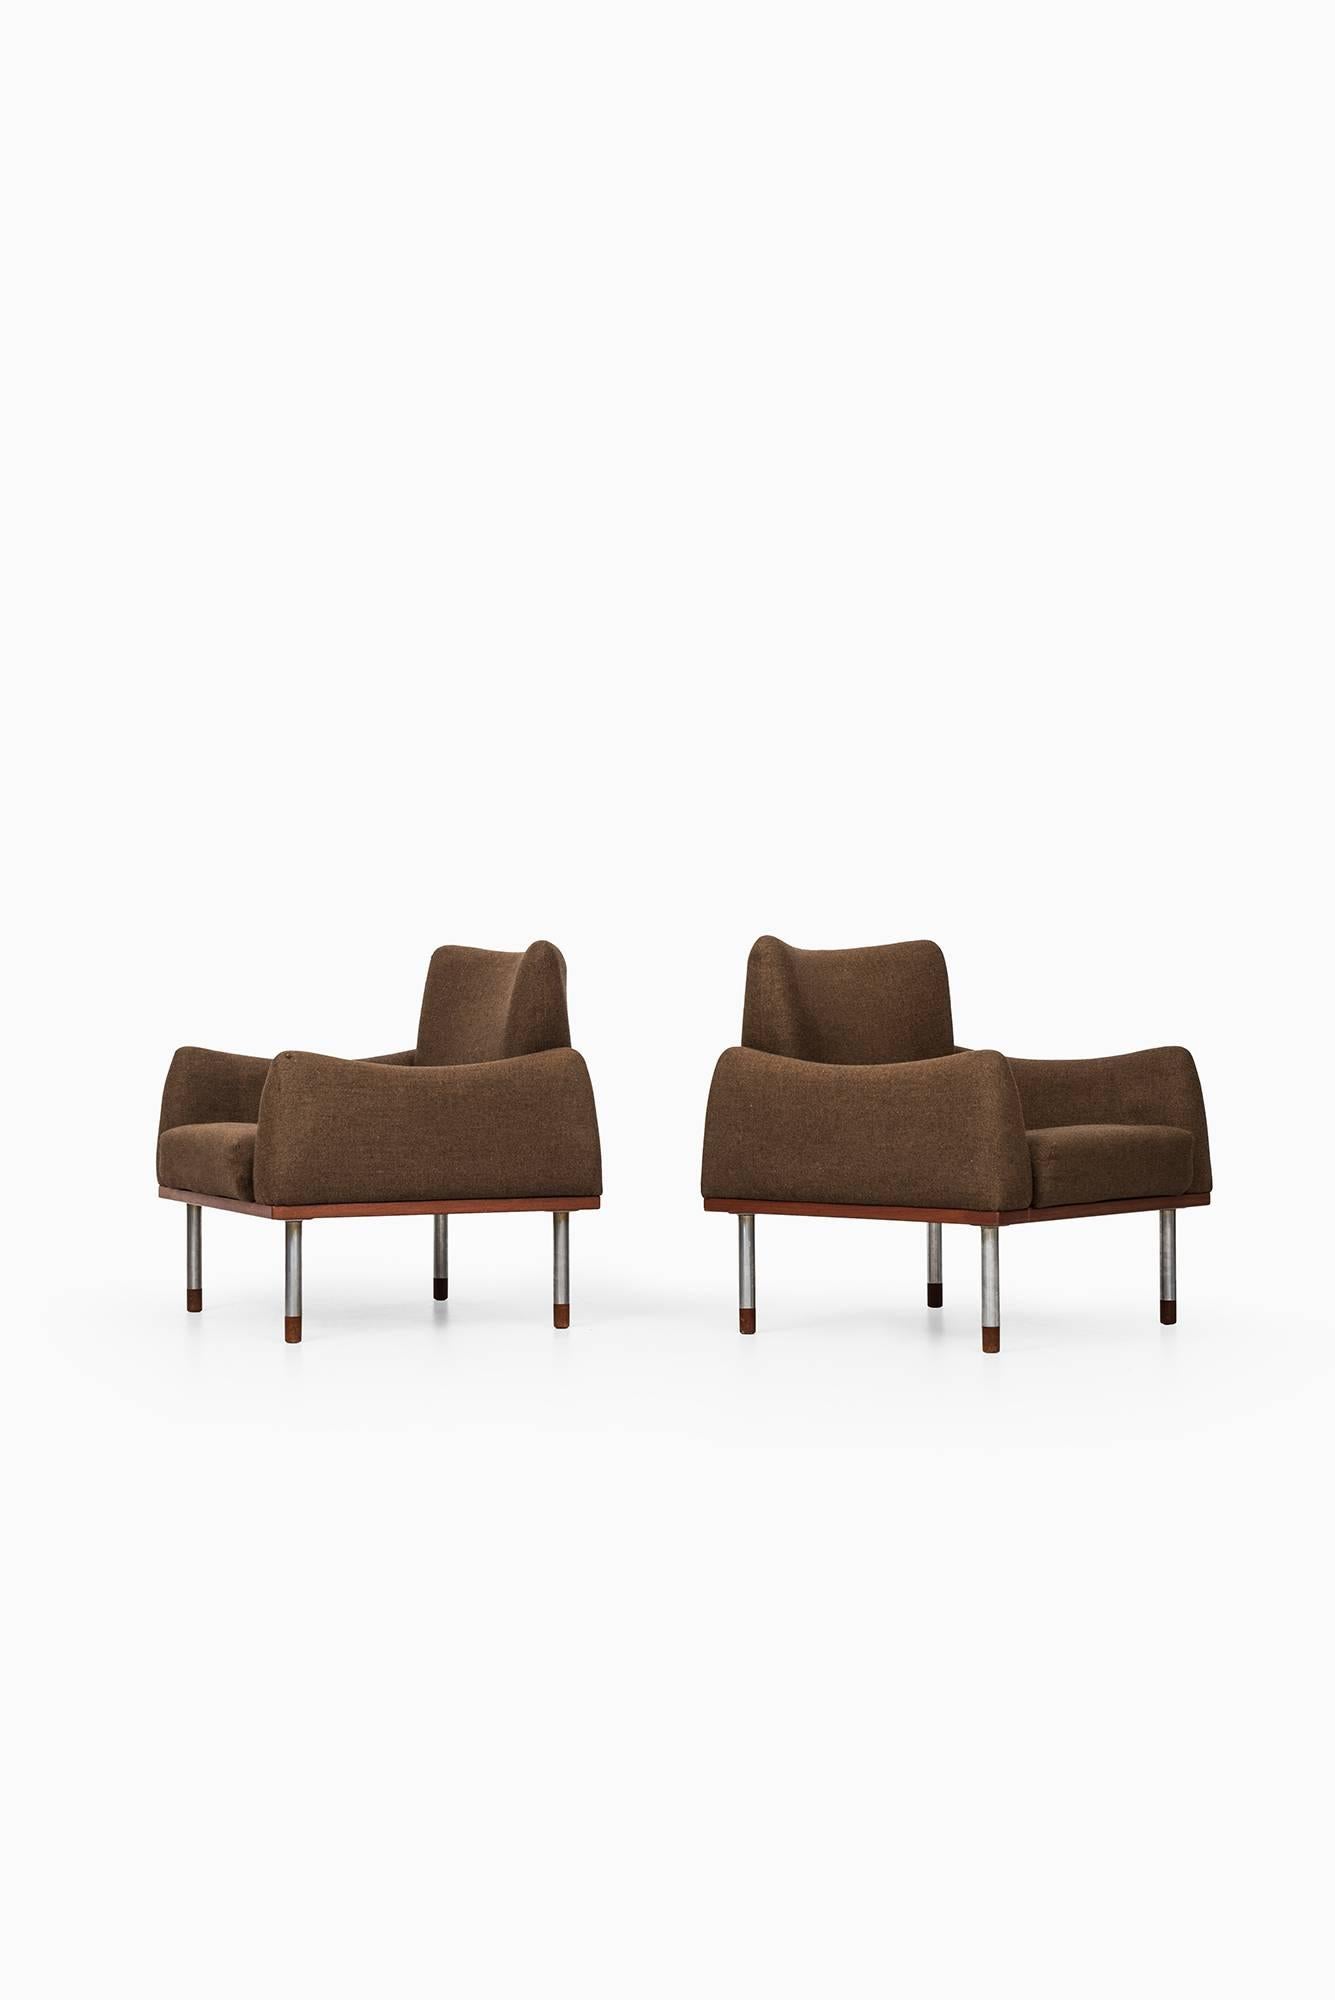 Very rare pair of easy chairs designed by Nanna Ditzel & Illum Wikkelsø. Produced by Søren Willadsen Møbelfabrik in Denmark.